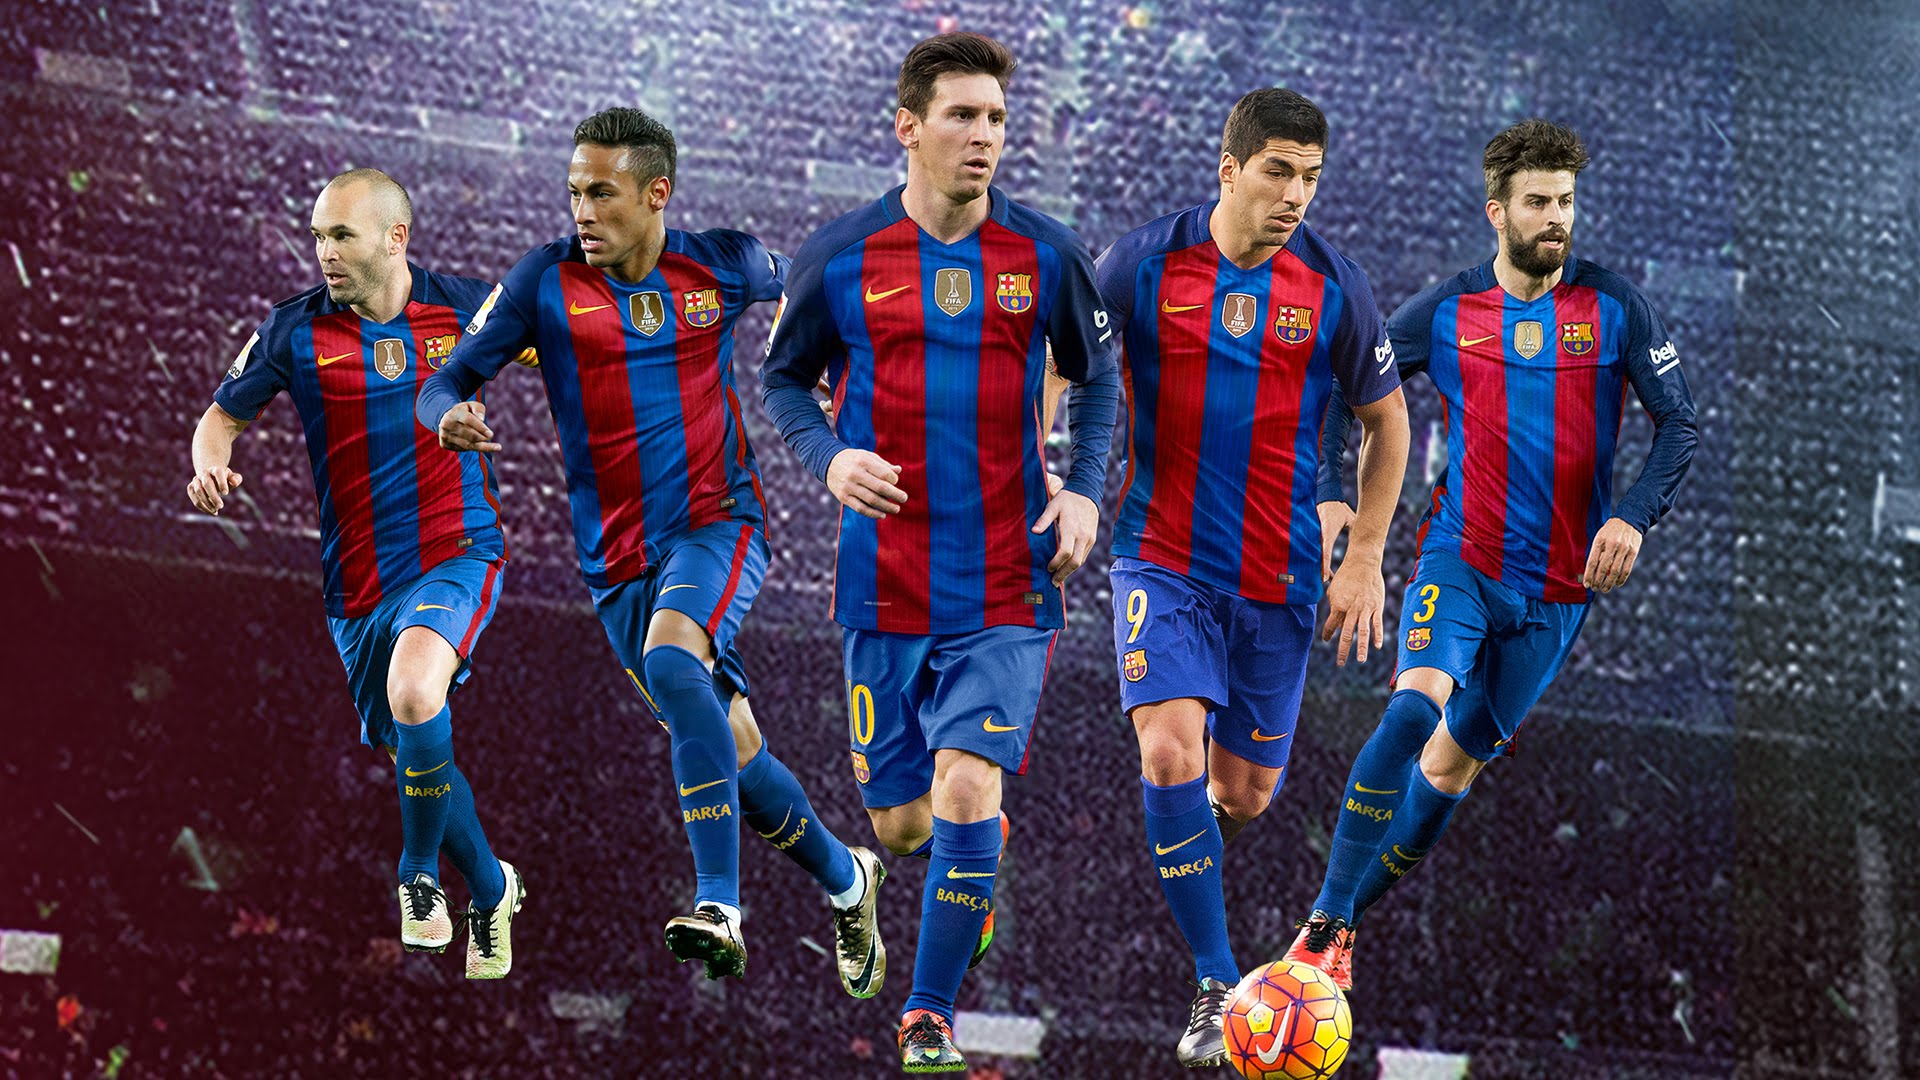 barcelona team wallpaper,fußballspieler,fußballspieler,mannschaft,spieler,fußball